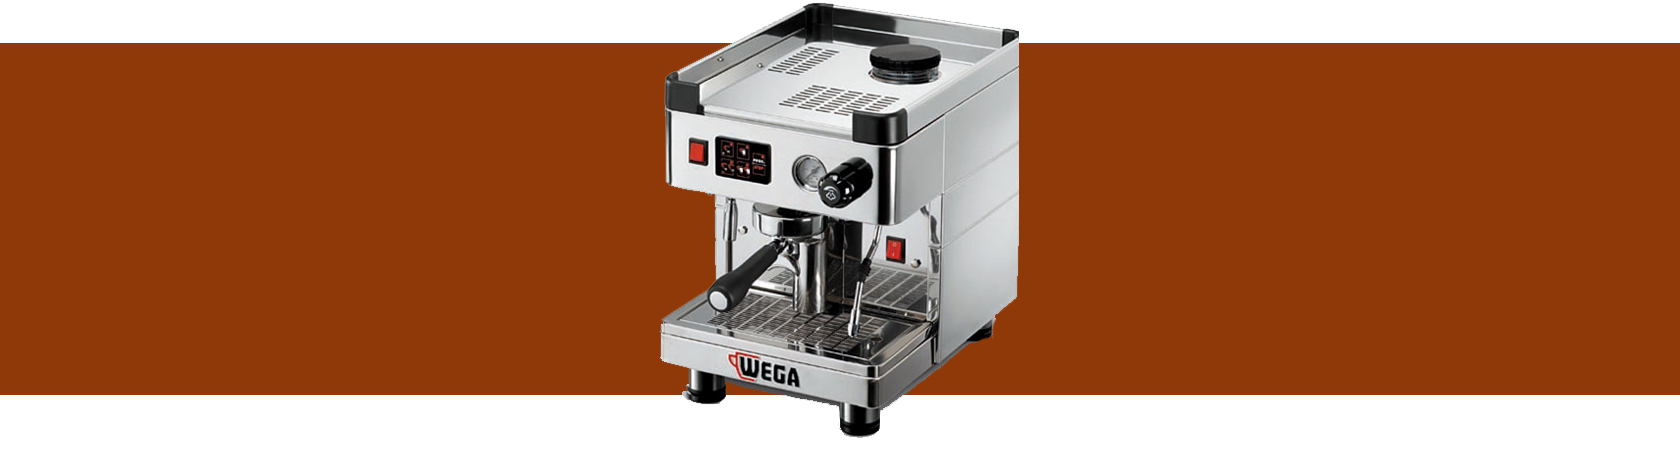 Wega Coffee Machine Repair